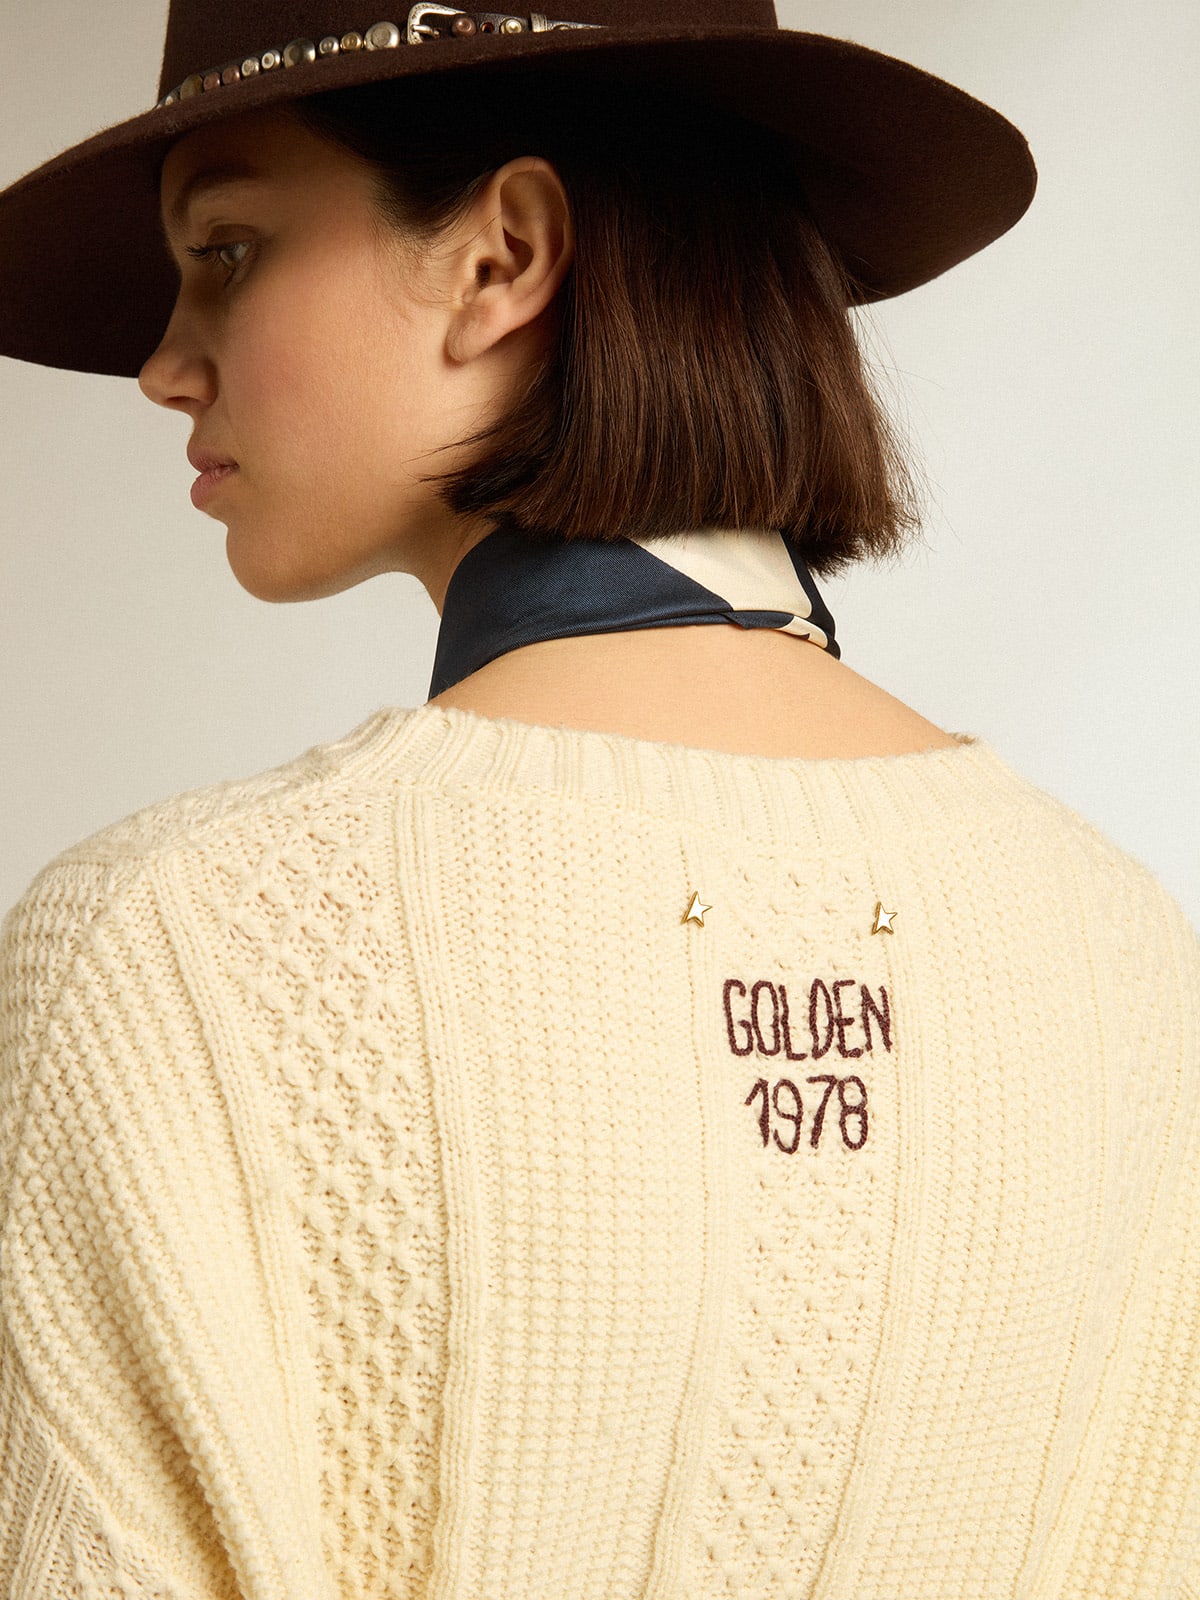 Golden Goose - Vestido de lã com bordado nas costas in 